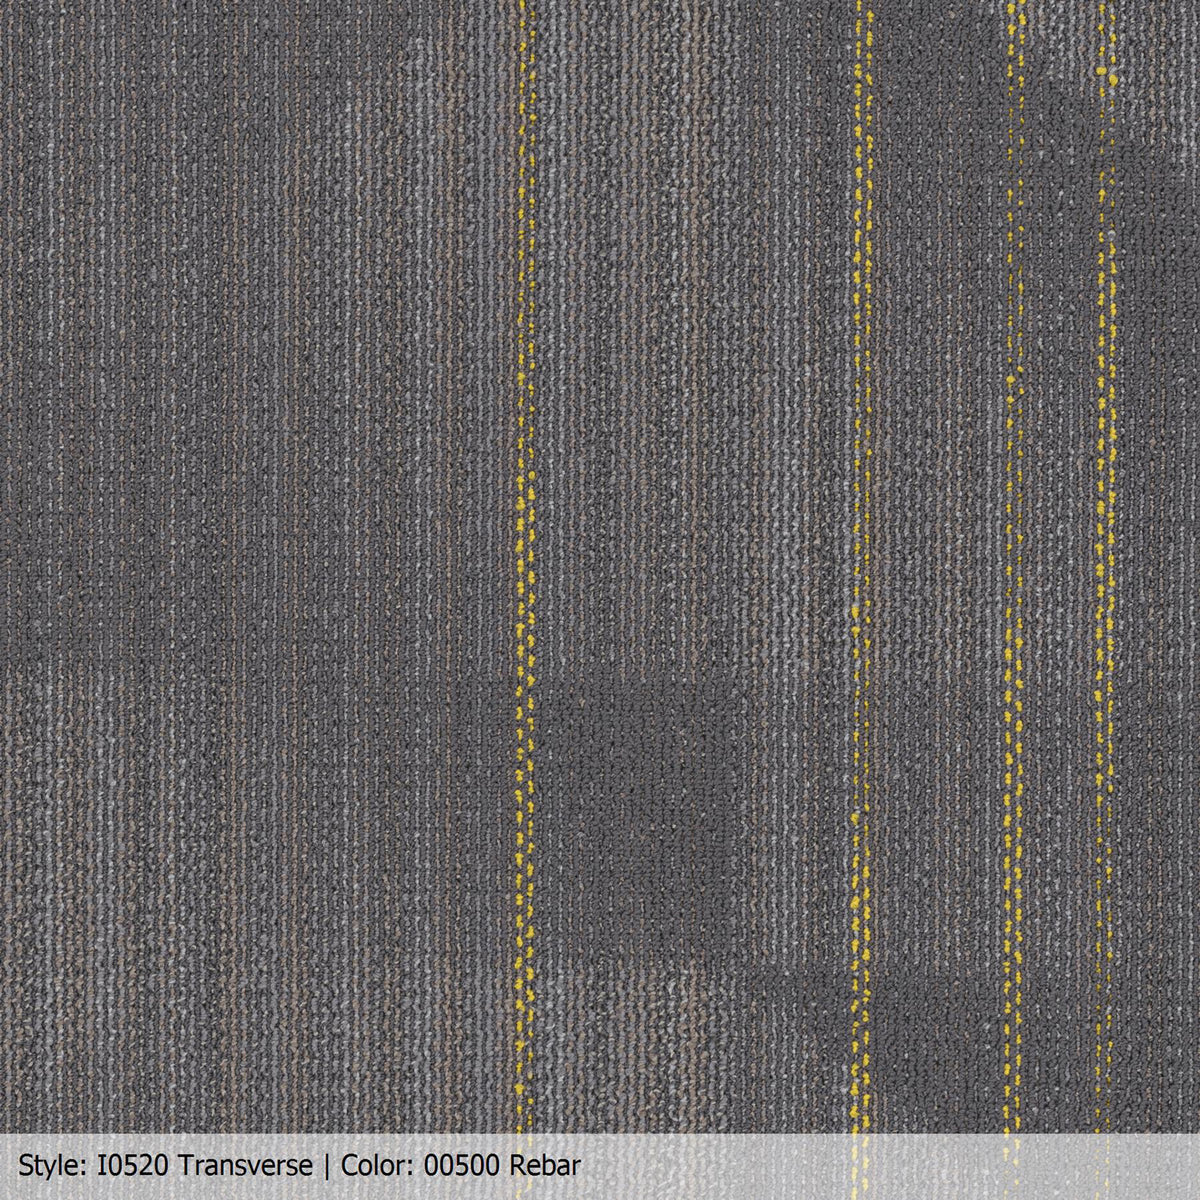 Patcraft - Infrastructure Collection - Transverse Carpet Tile - Rebar